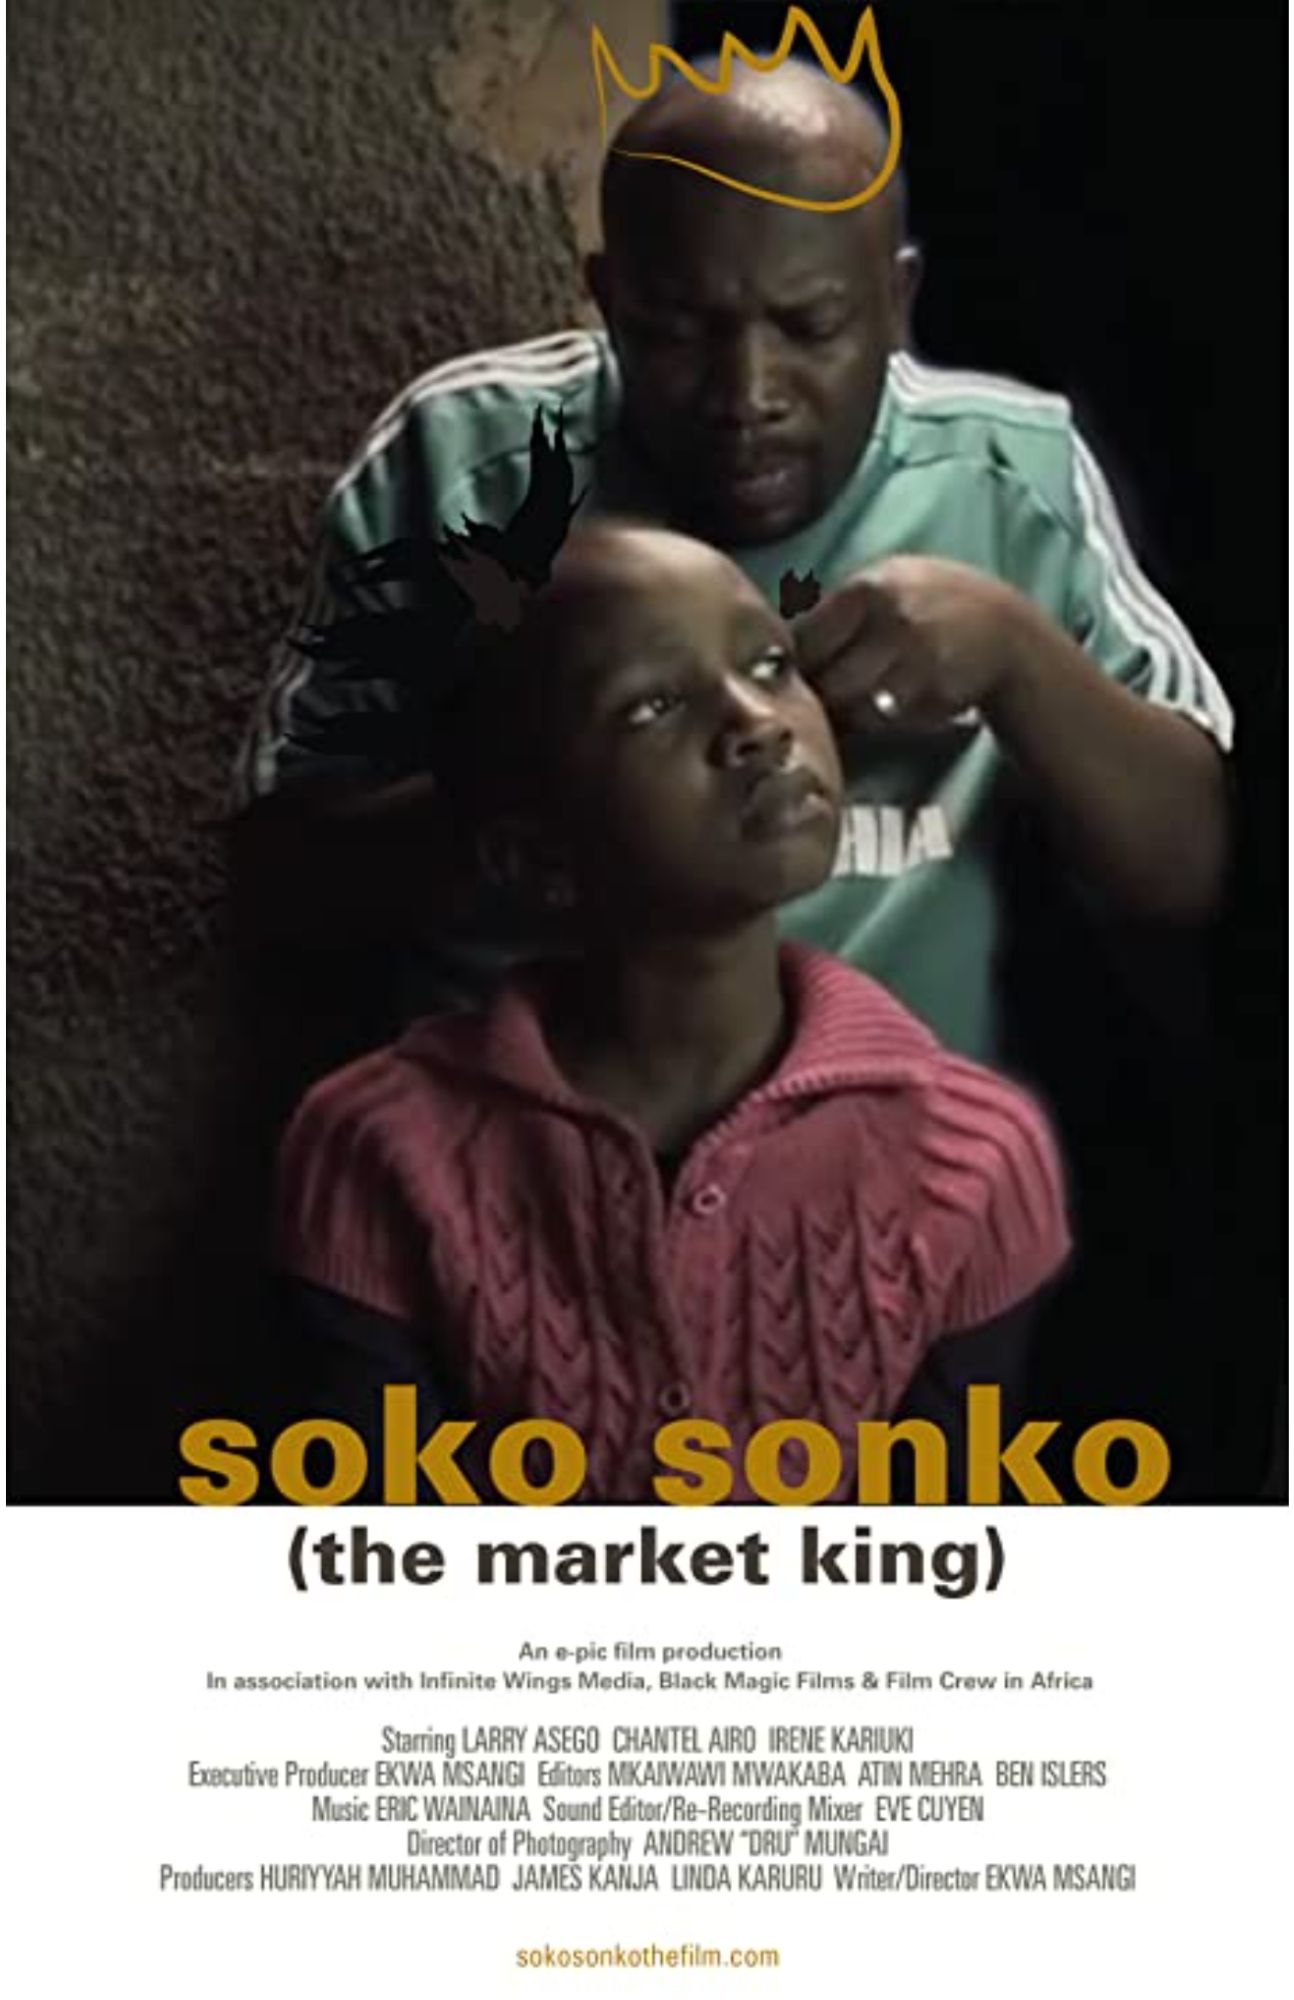 SOKO SONKO, Ekwa Msangi, writer, director, producer